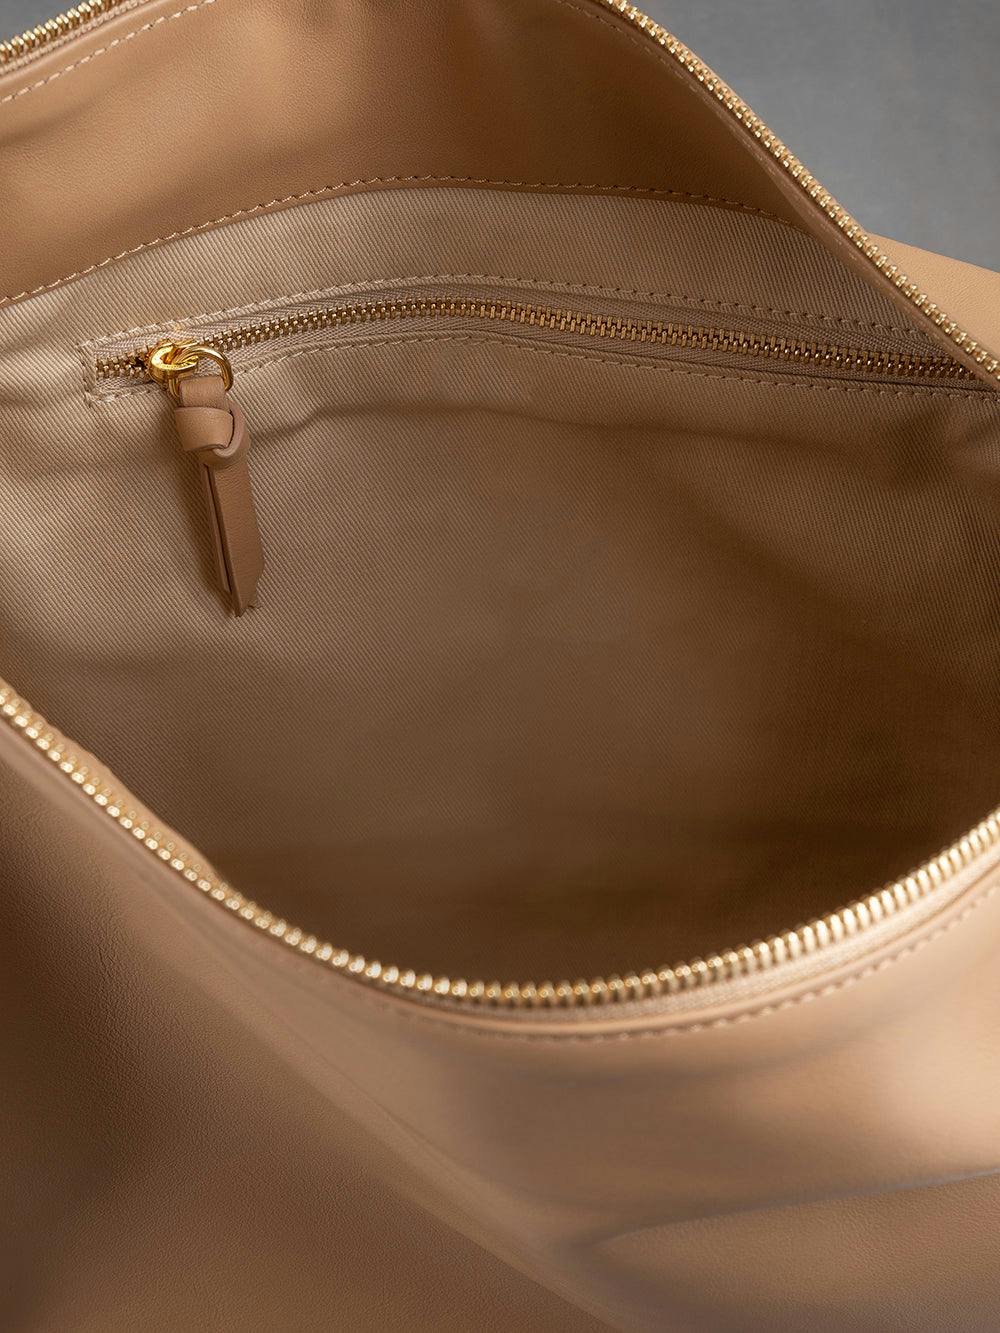 handbag detail view alt:hover